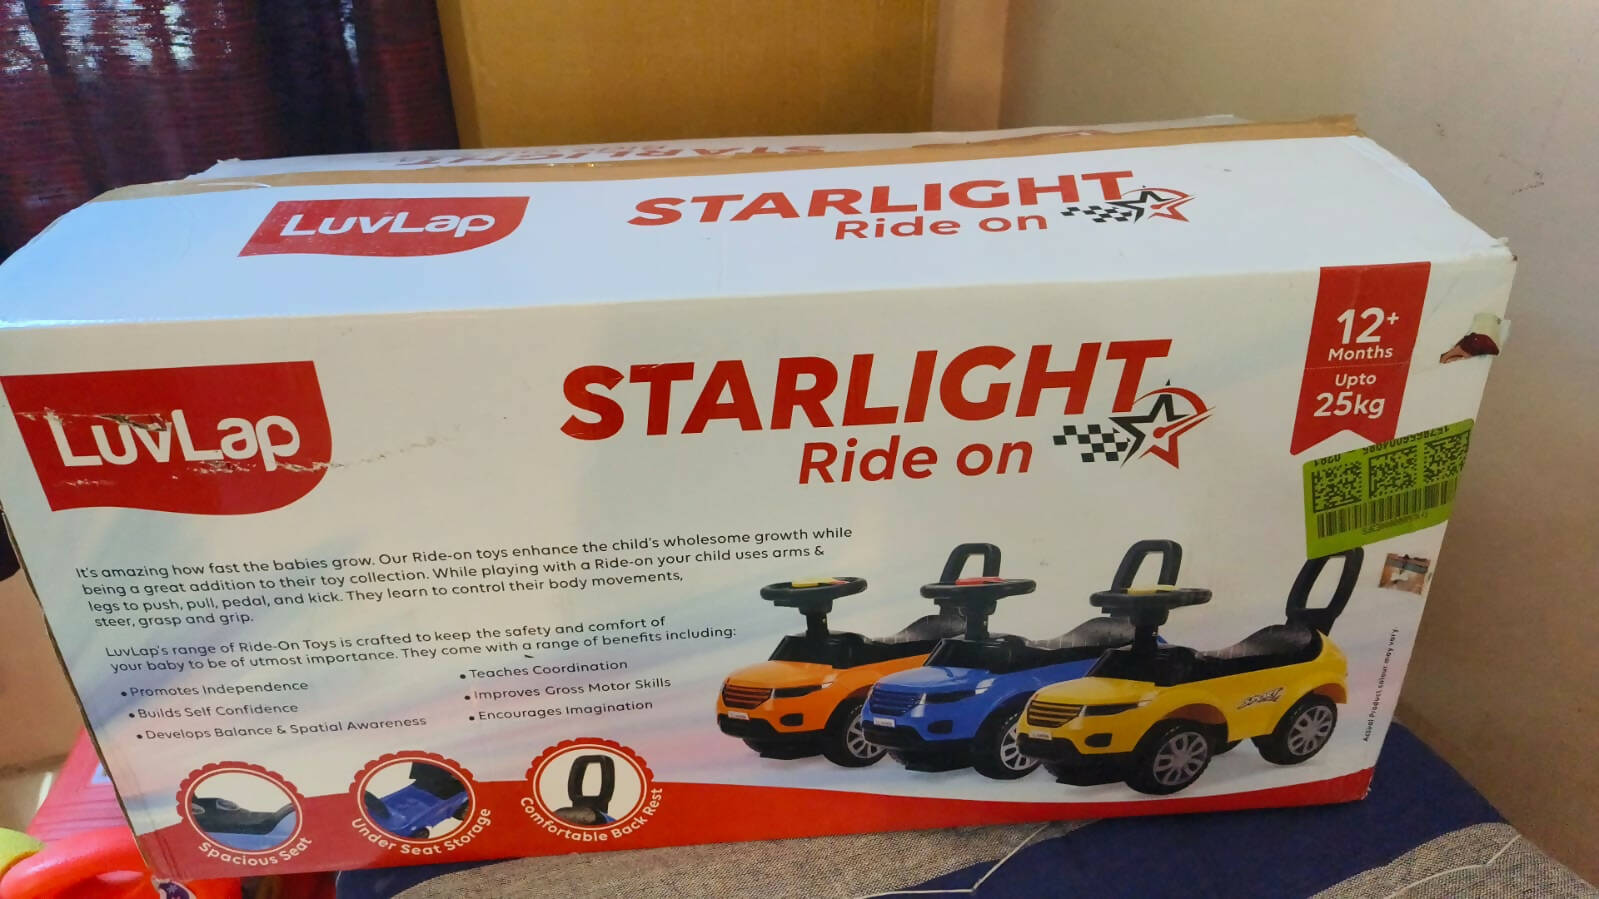 LUVLAP Starlight Ride-on for Kids - PyaraBaby